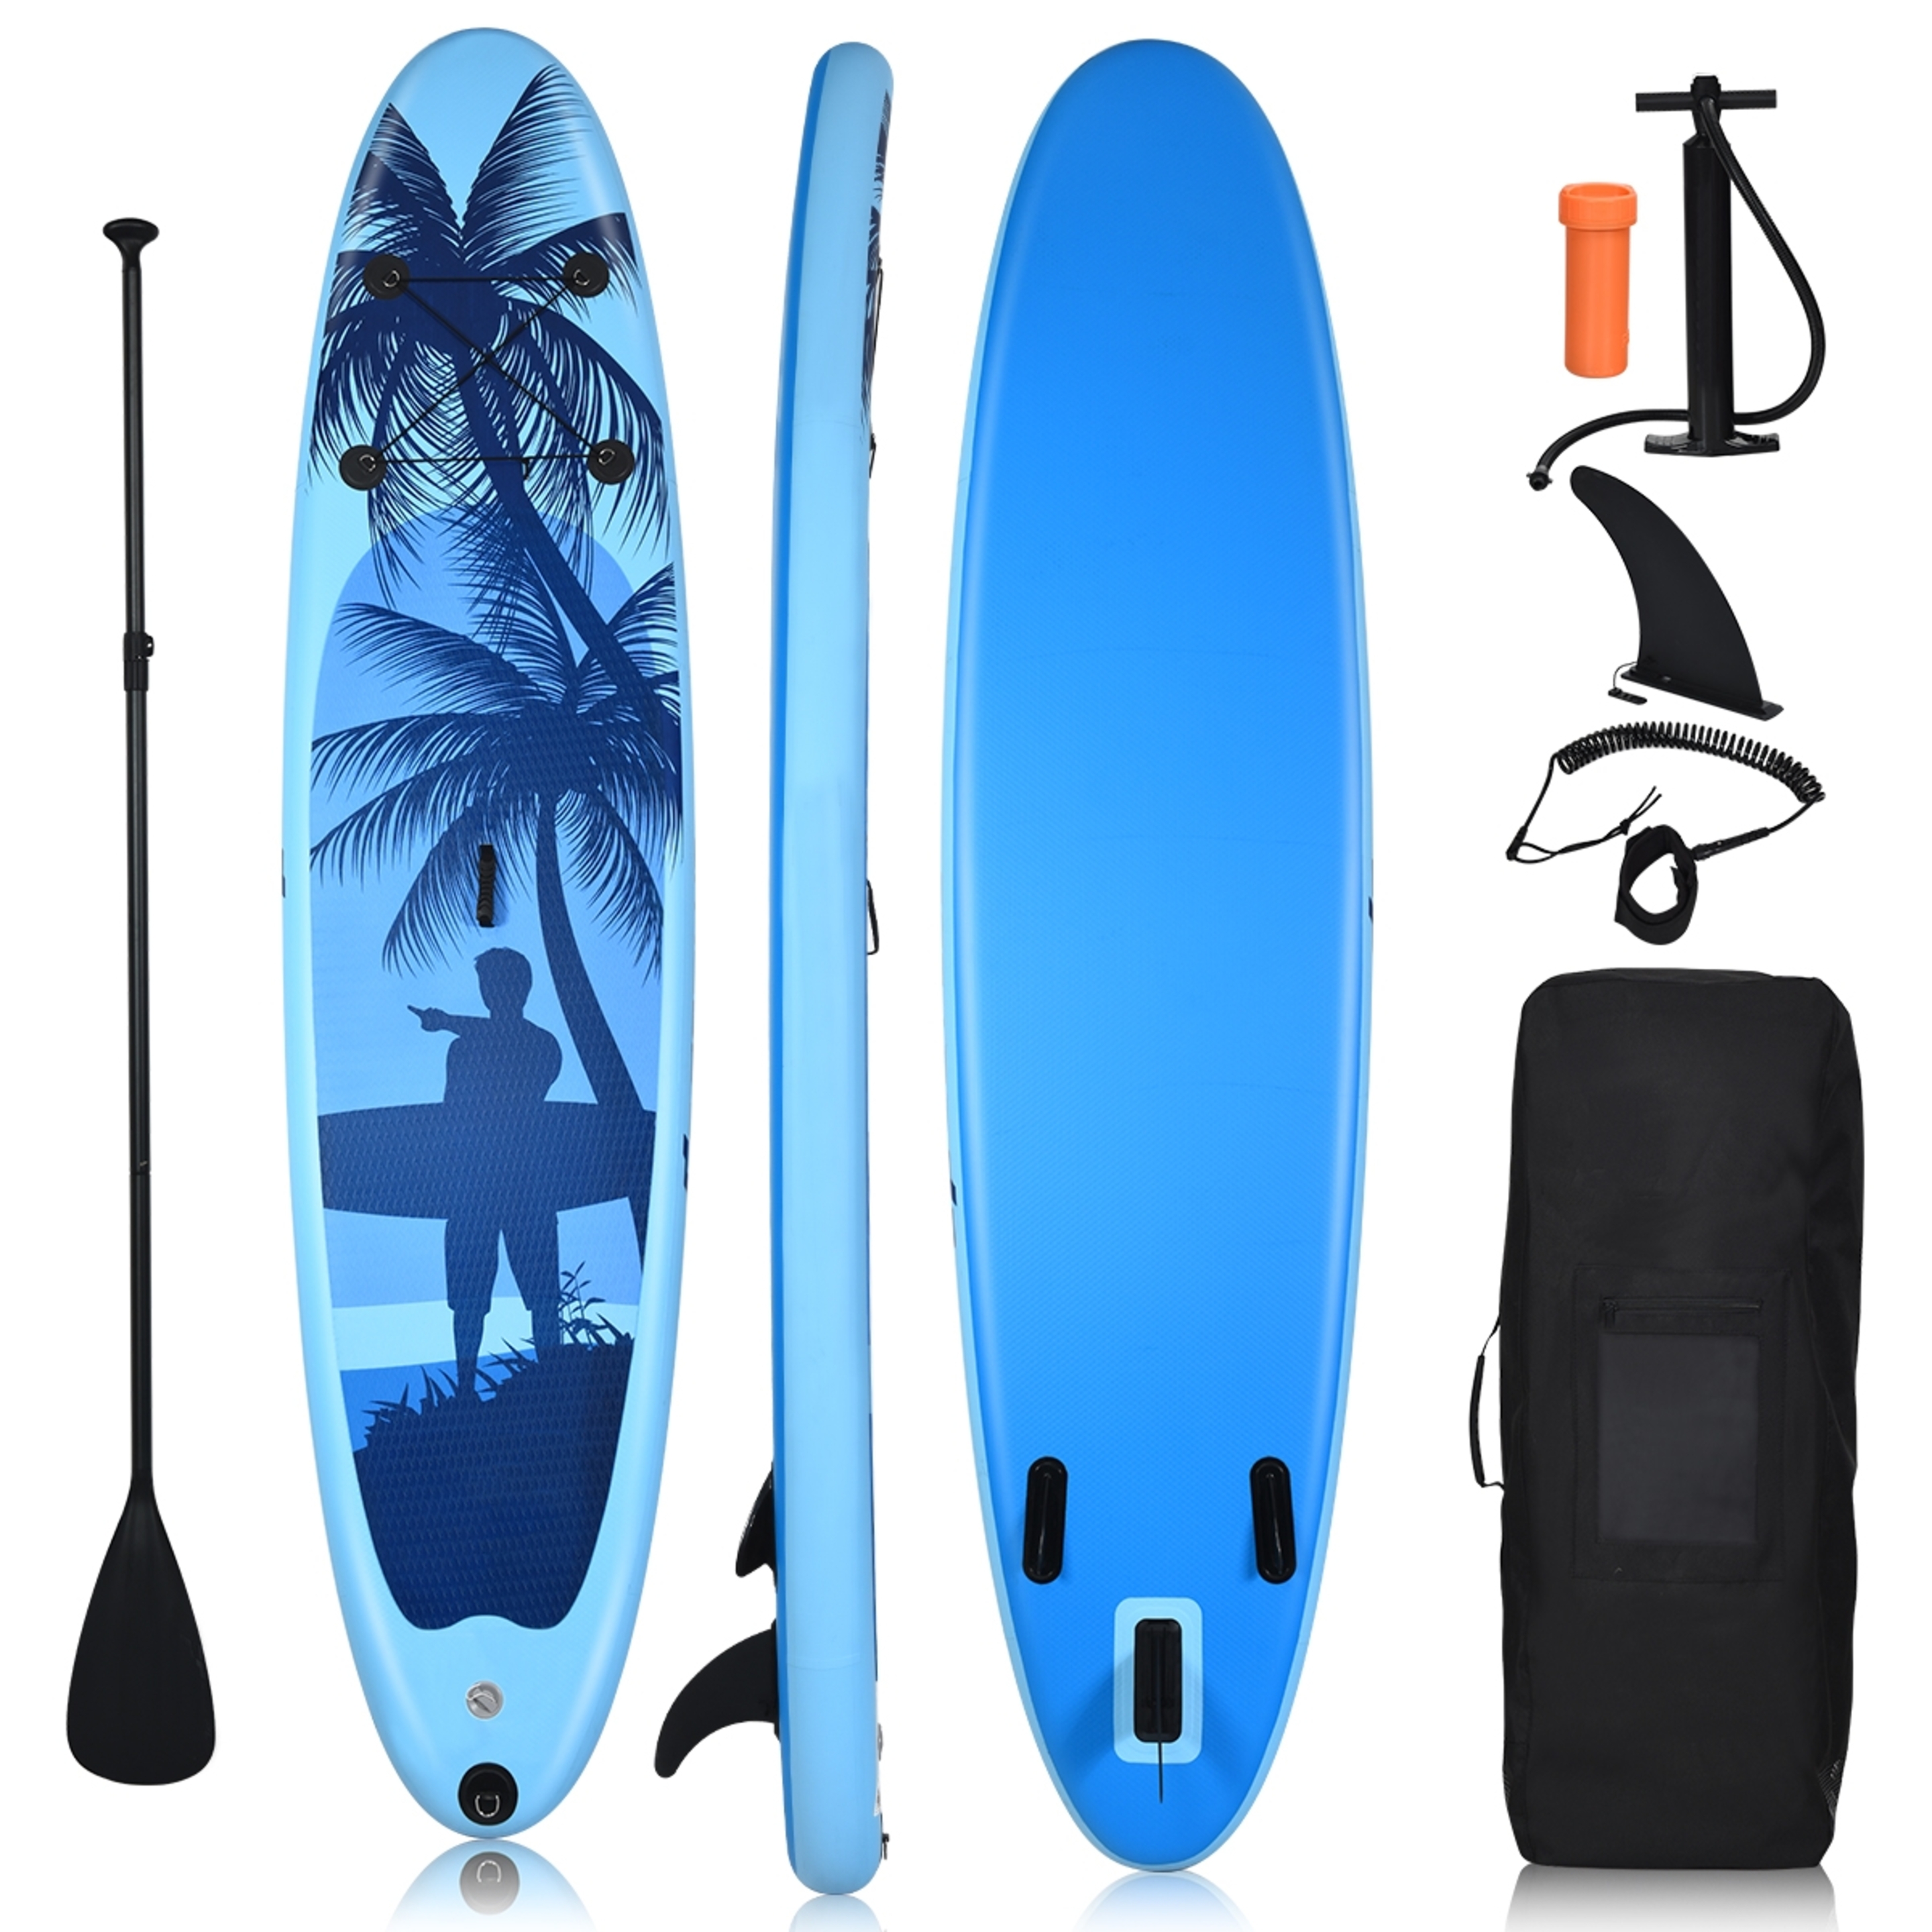 Tabla Hinchable Costway  Pvc Paddle Surf Sup 305 X 76 X 16 Cm - Azul - Tabla De Surf  MKP